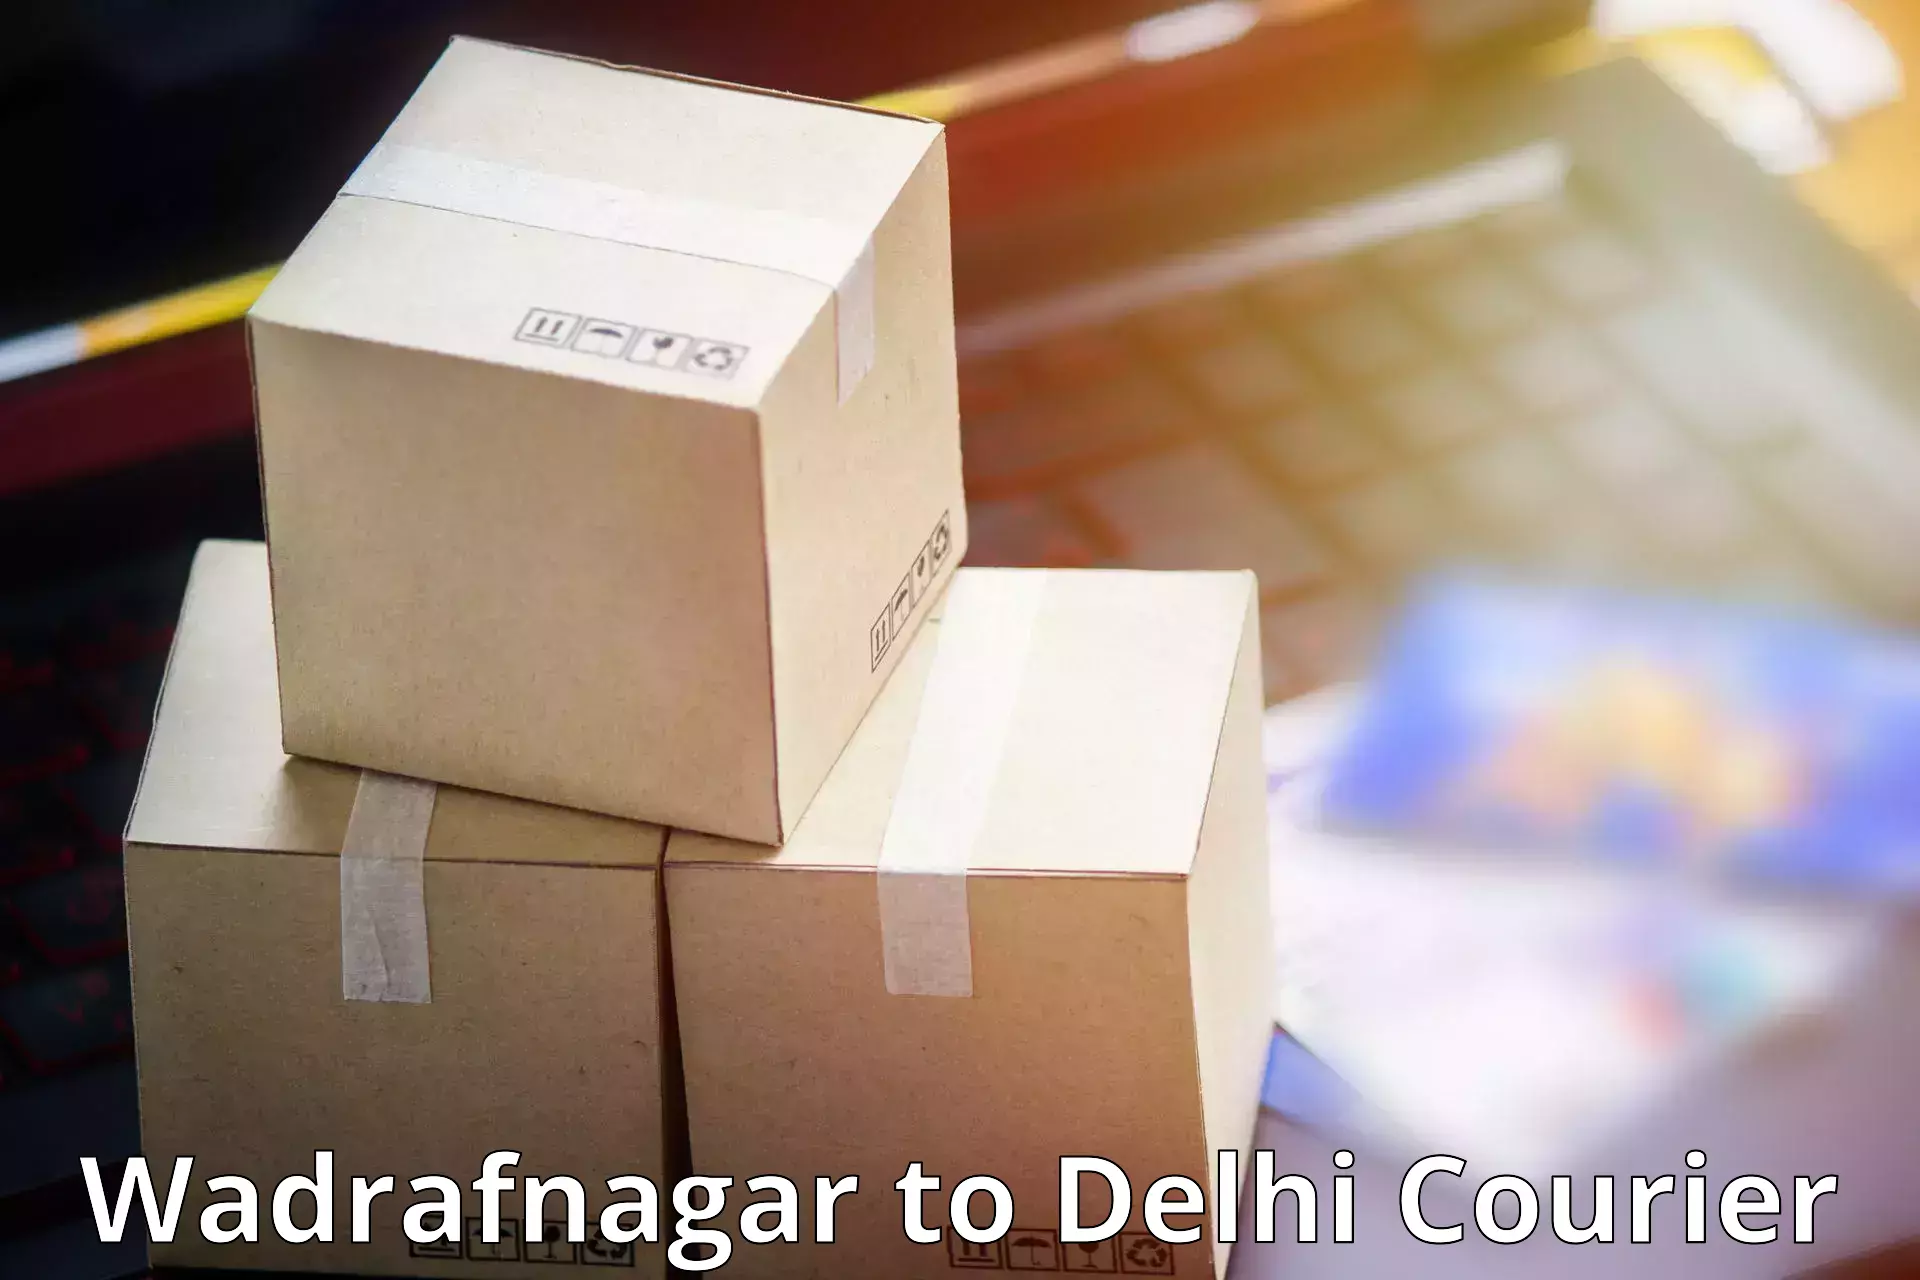 Ground shipping Wadrafnagar to University of Delhi